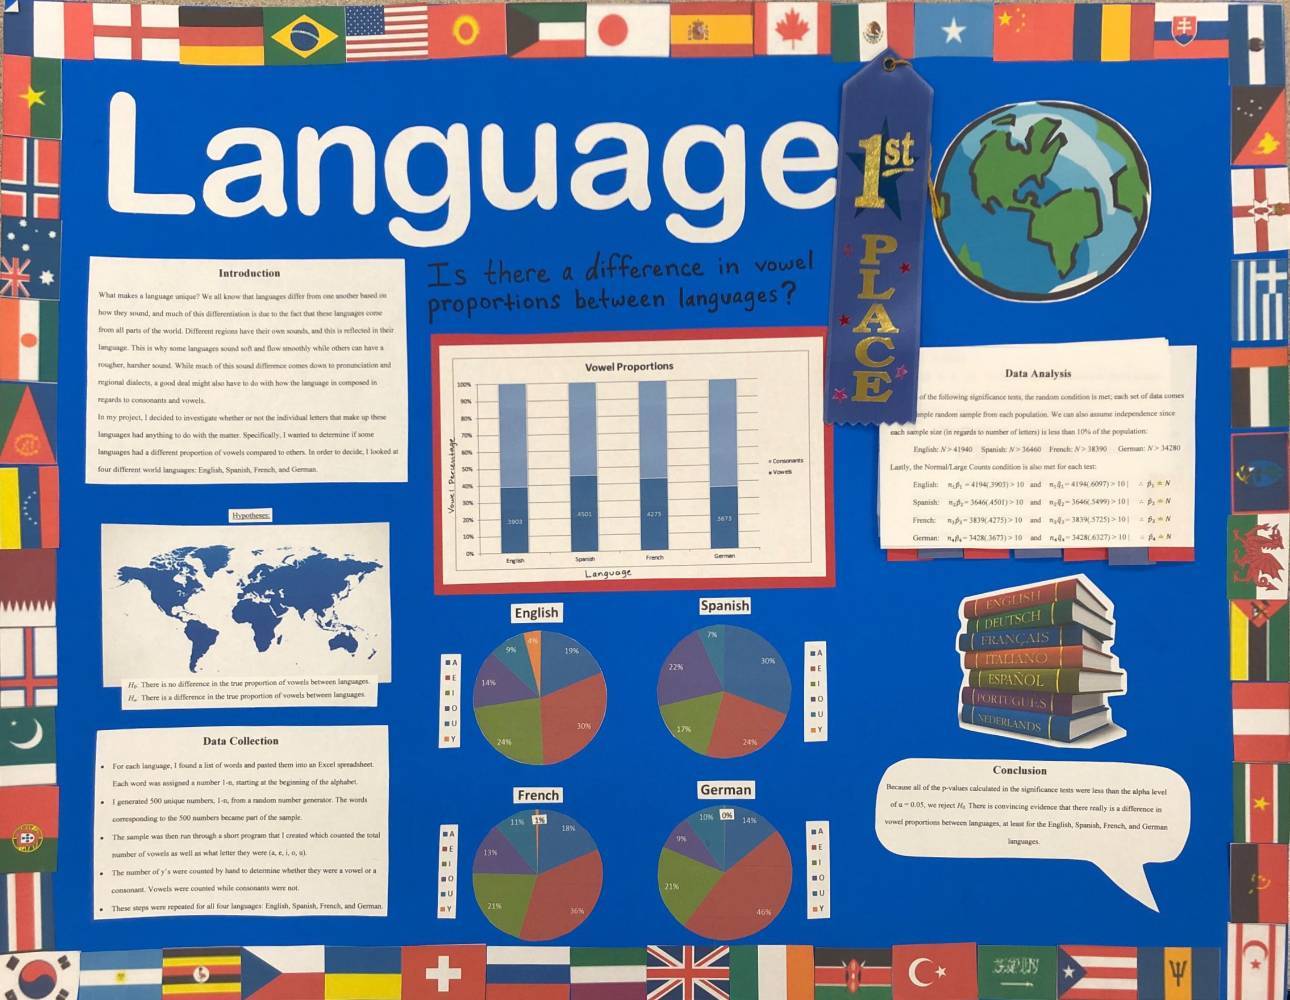 Example Poster: "Language"